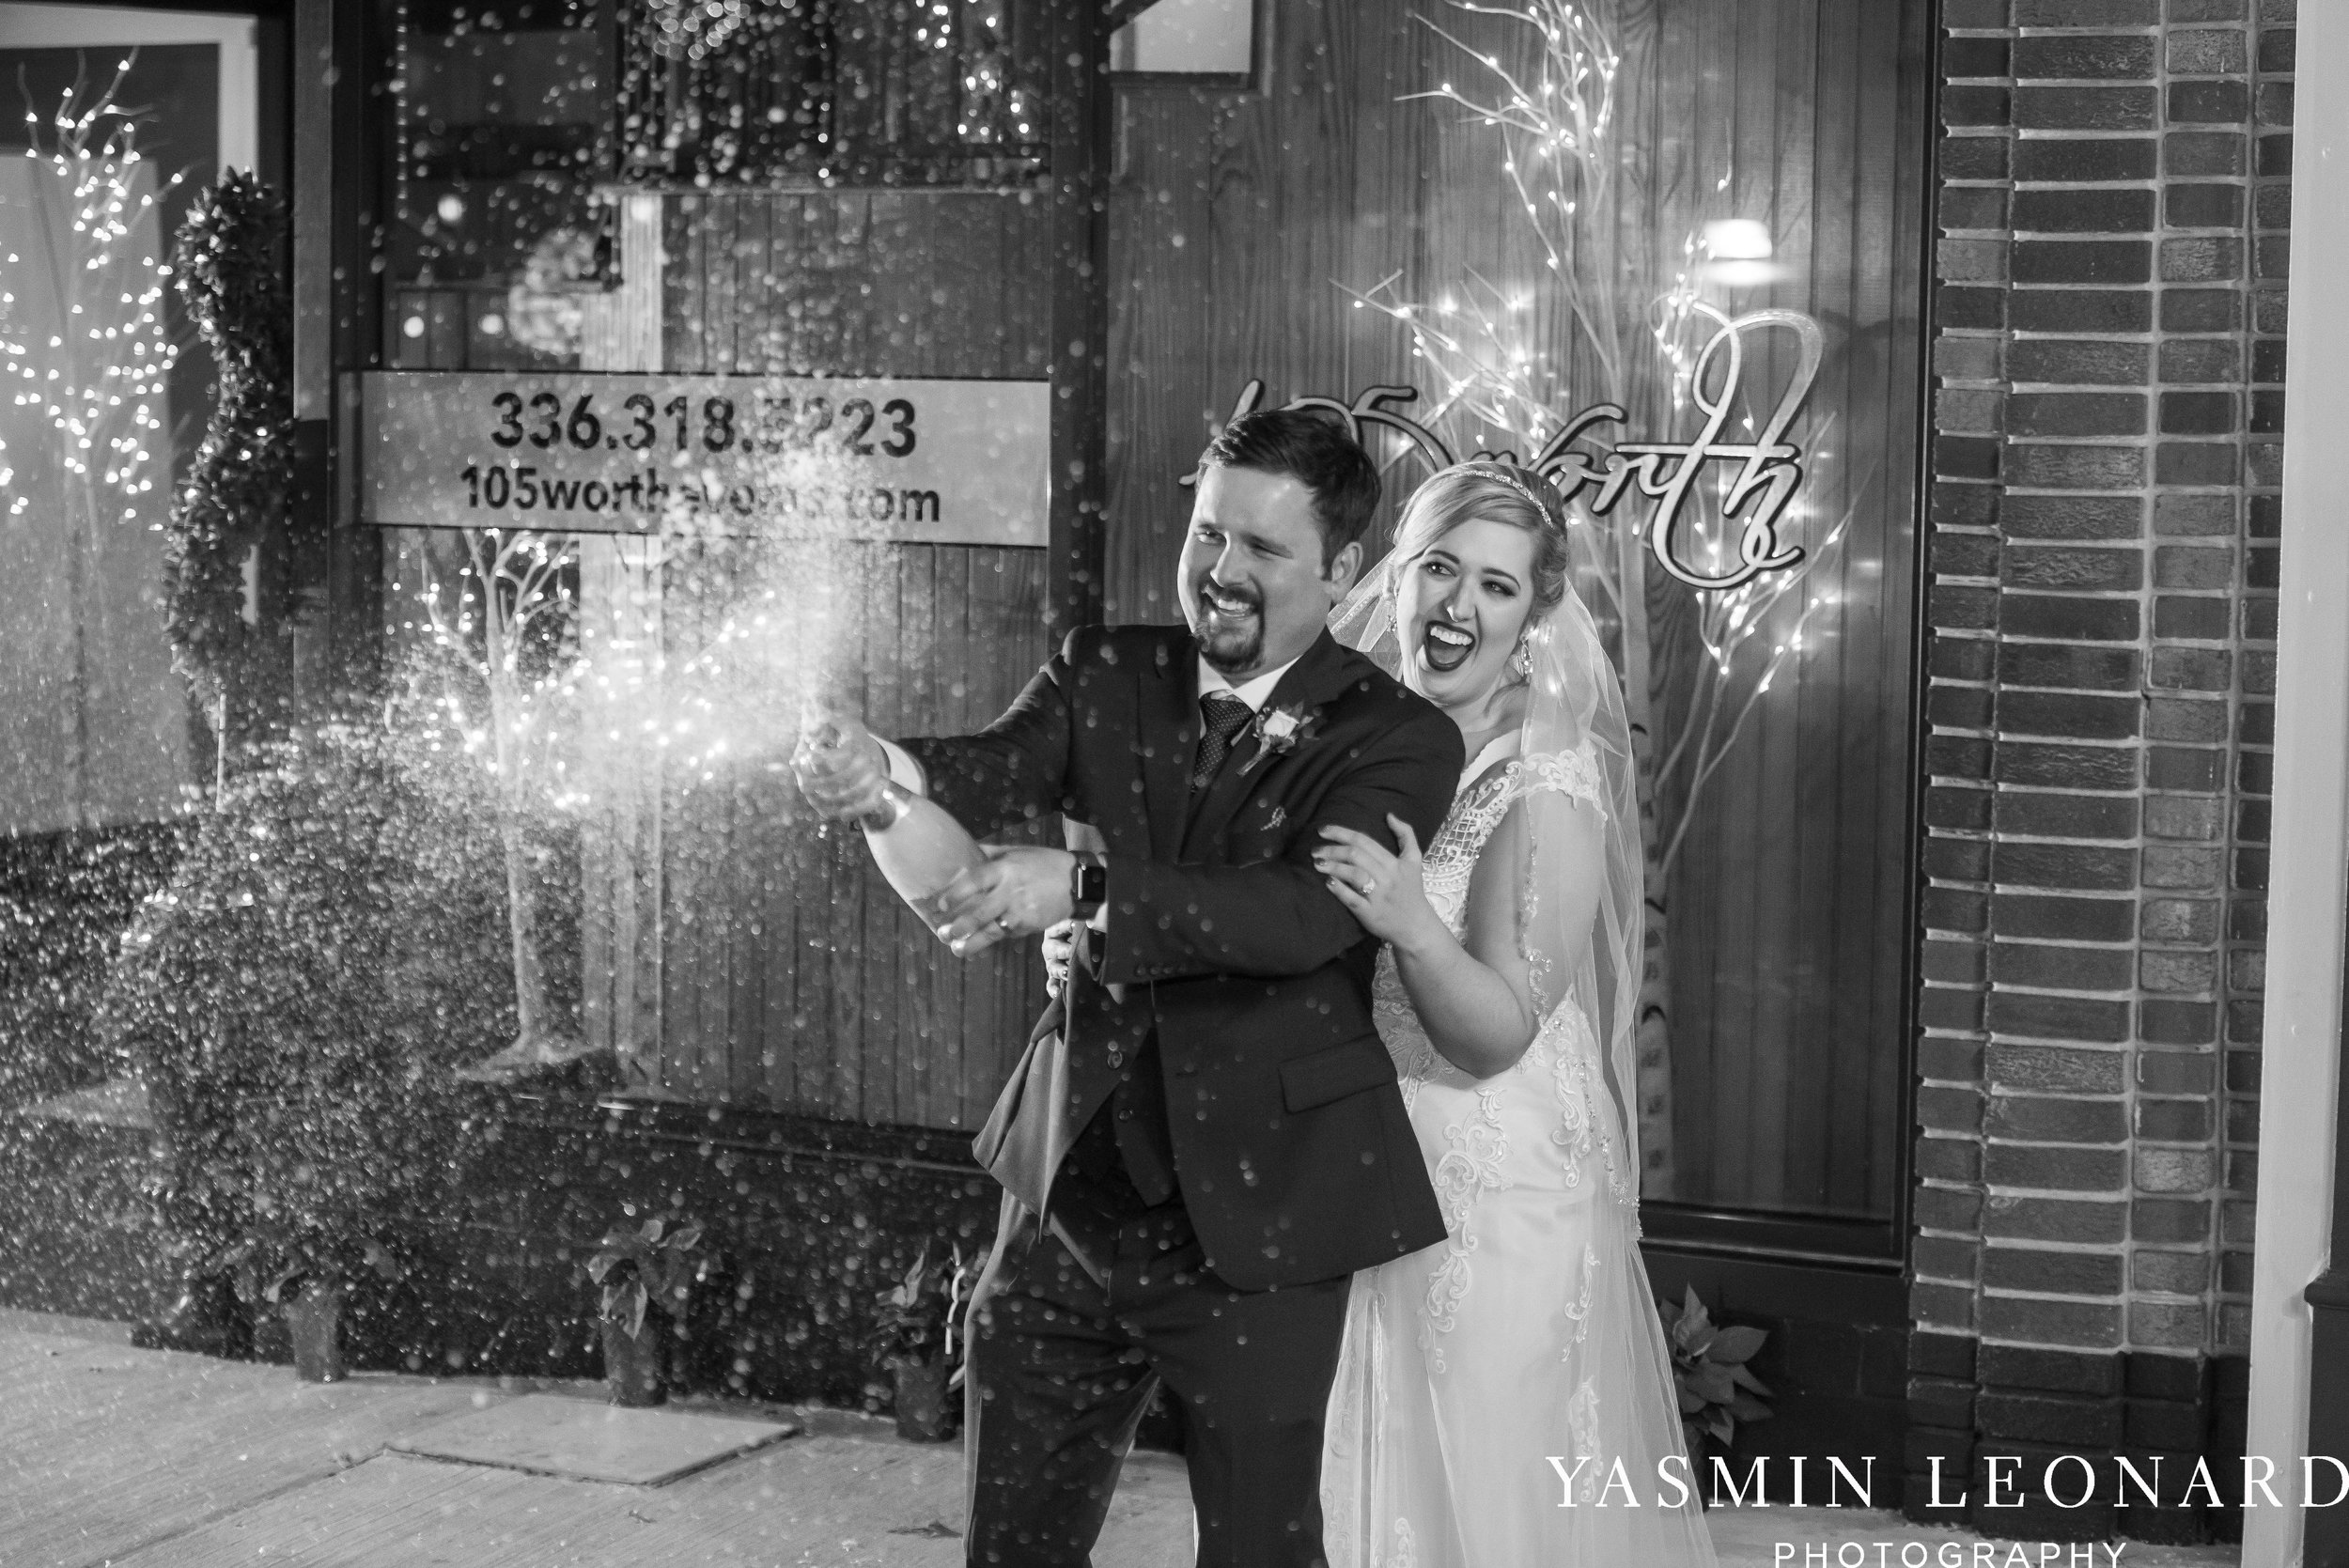 Rebekah and Matt - 105 Worth Event Centre - Yasmin Leonard Photography - Asheboro Wedding - NC Wedding - High Point Weddings - Triad Weddings - Winter Wedding-44.jpg